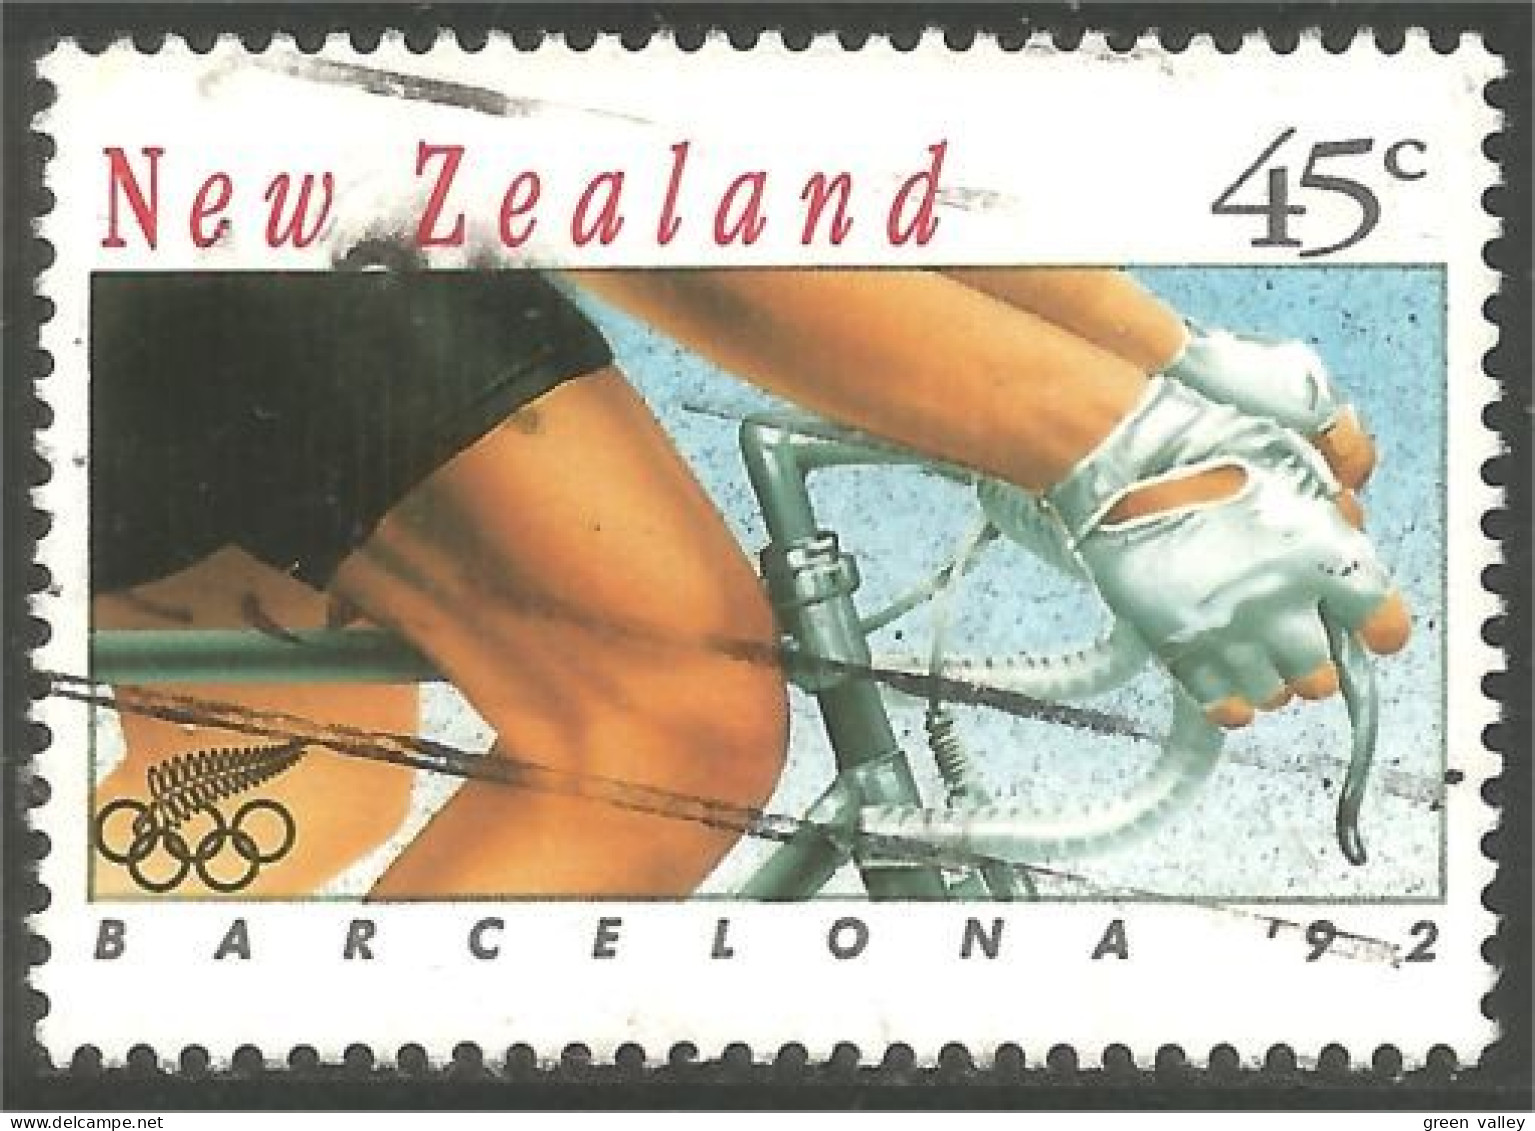 706 New Zealand Olympics Barcelona Cycling Bicycle Race Fahrrad Bicyclette Vélo Cyclisme (NZ-155c) - Radsport